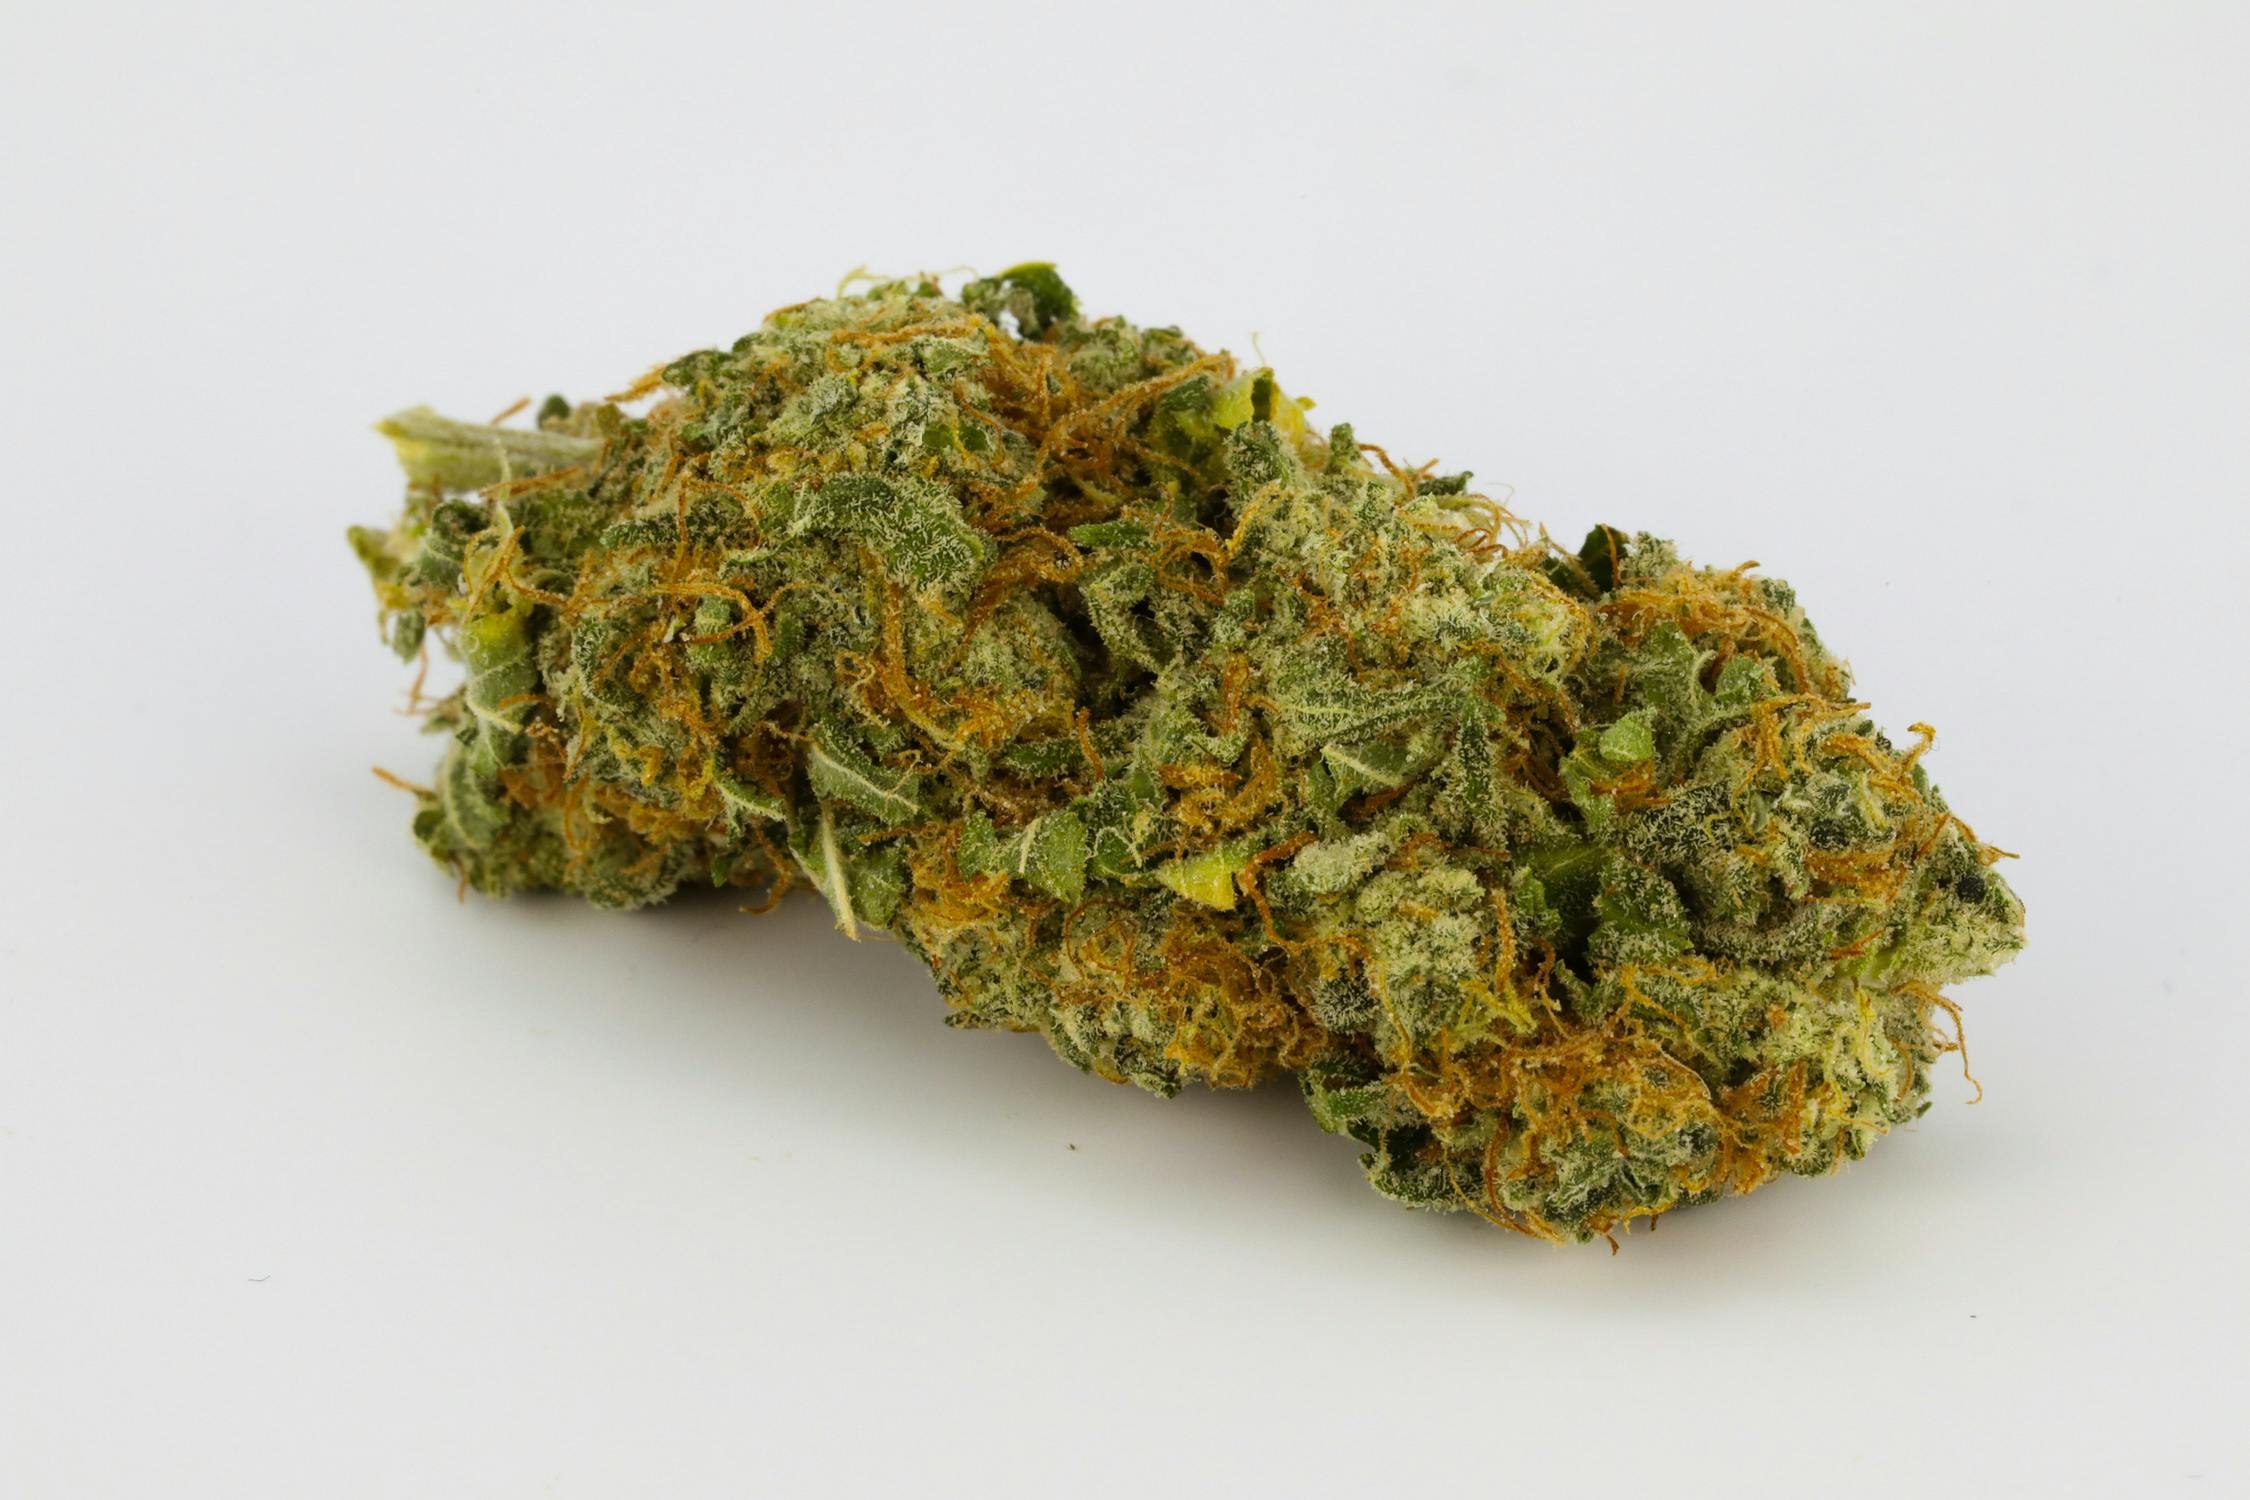 Chemdawg 4 Strain of Marijuana | Weed | Cannabis | Herb